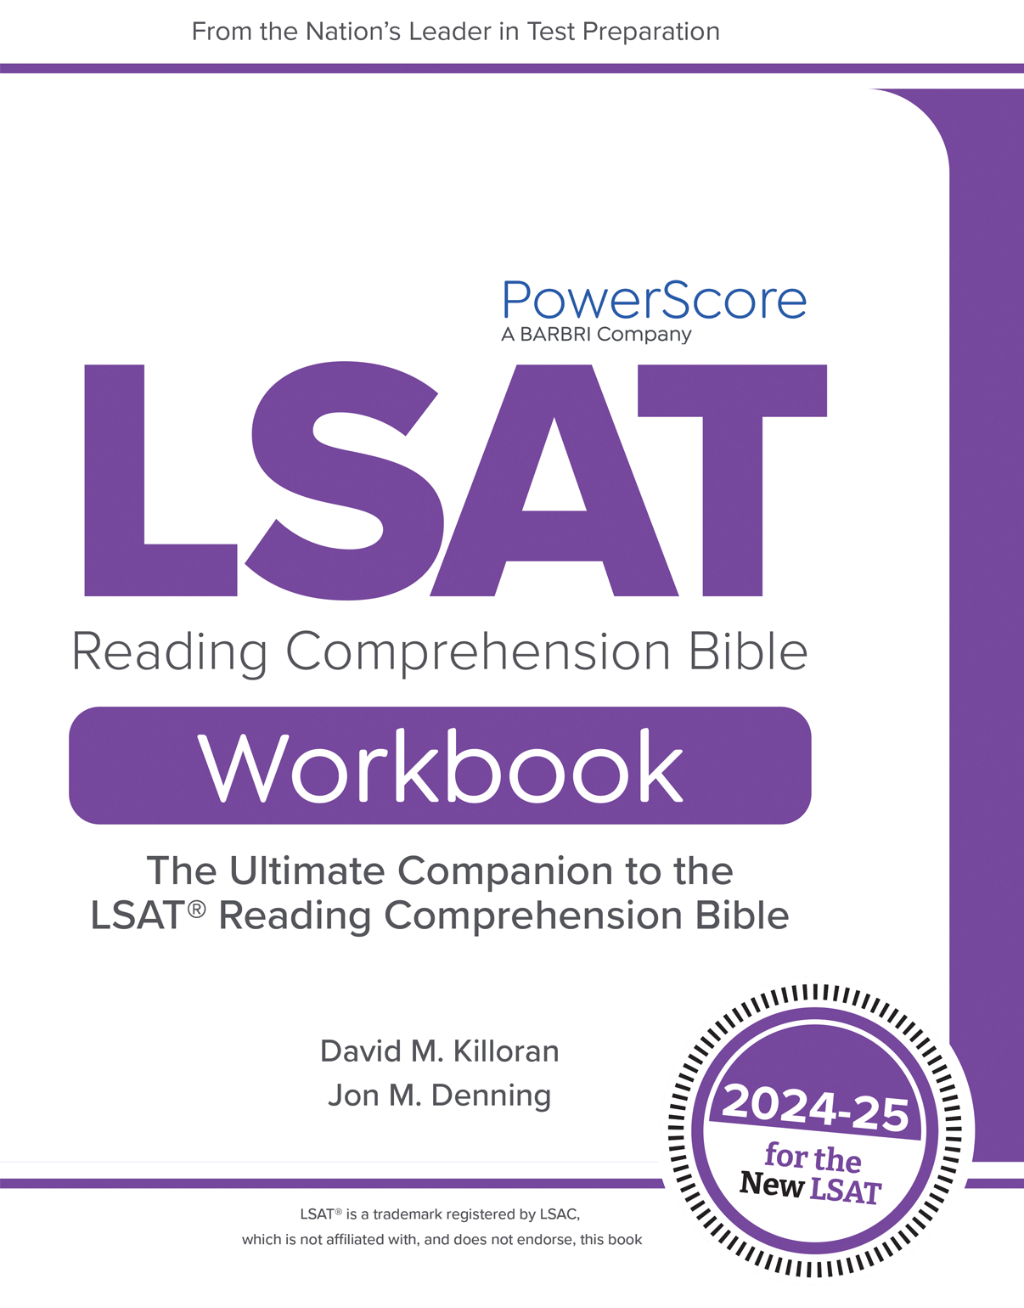 LSAT Reading Comprehension Bible Workbook cover